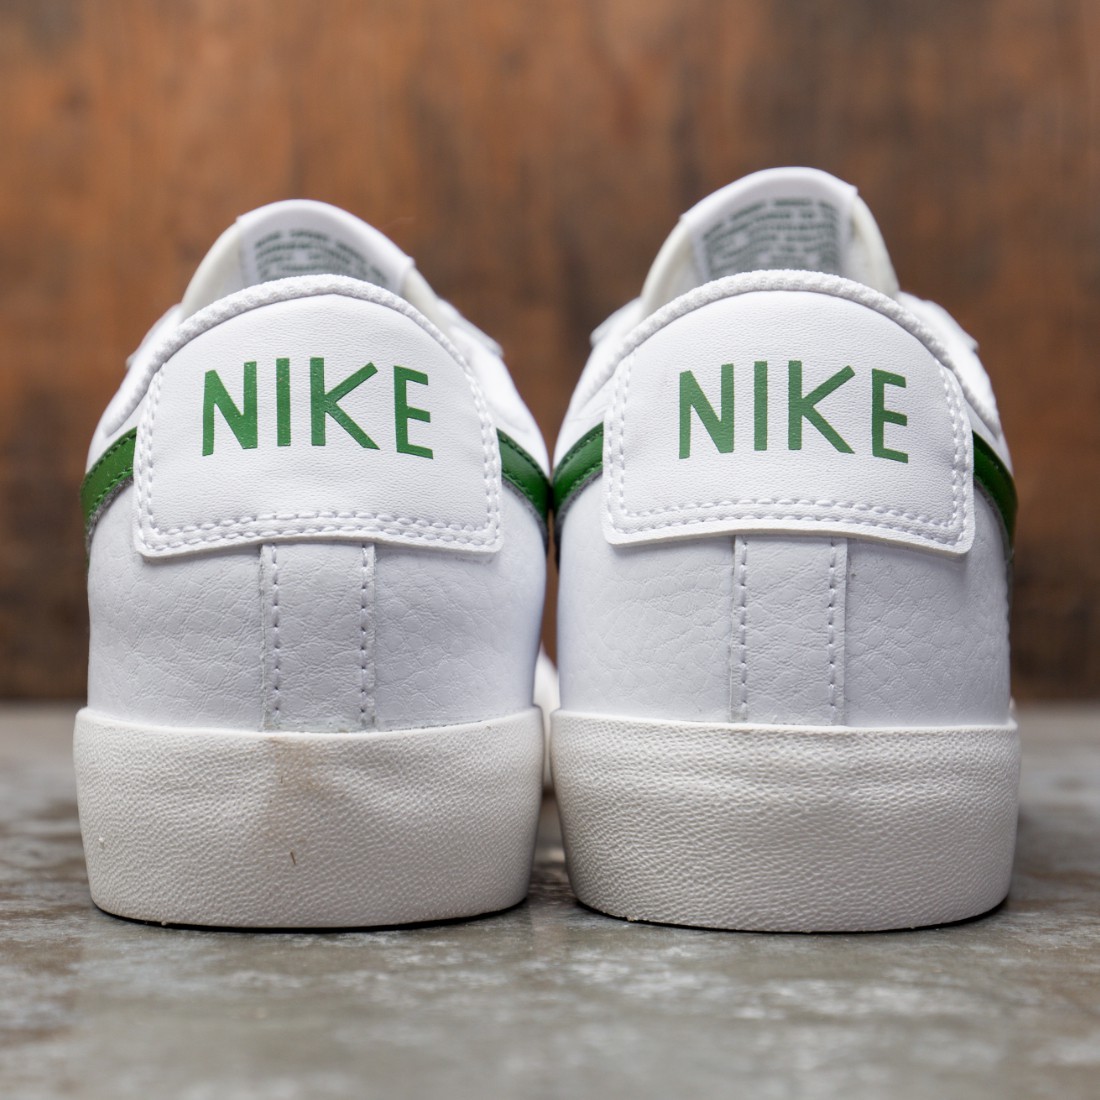 Nike Blazer Low Leather White/Green Spark-Sail - CI6377-105